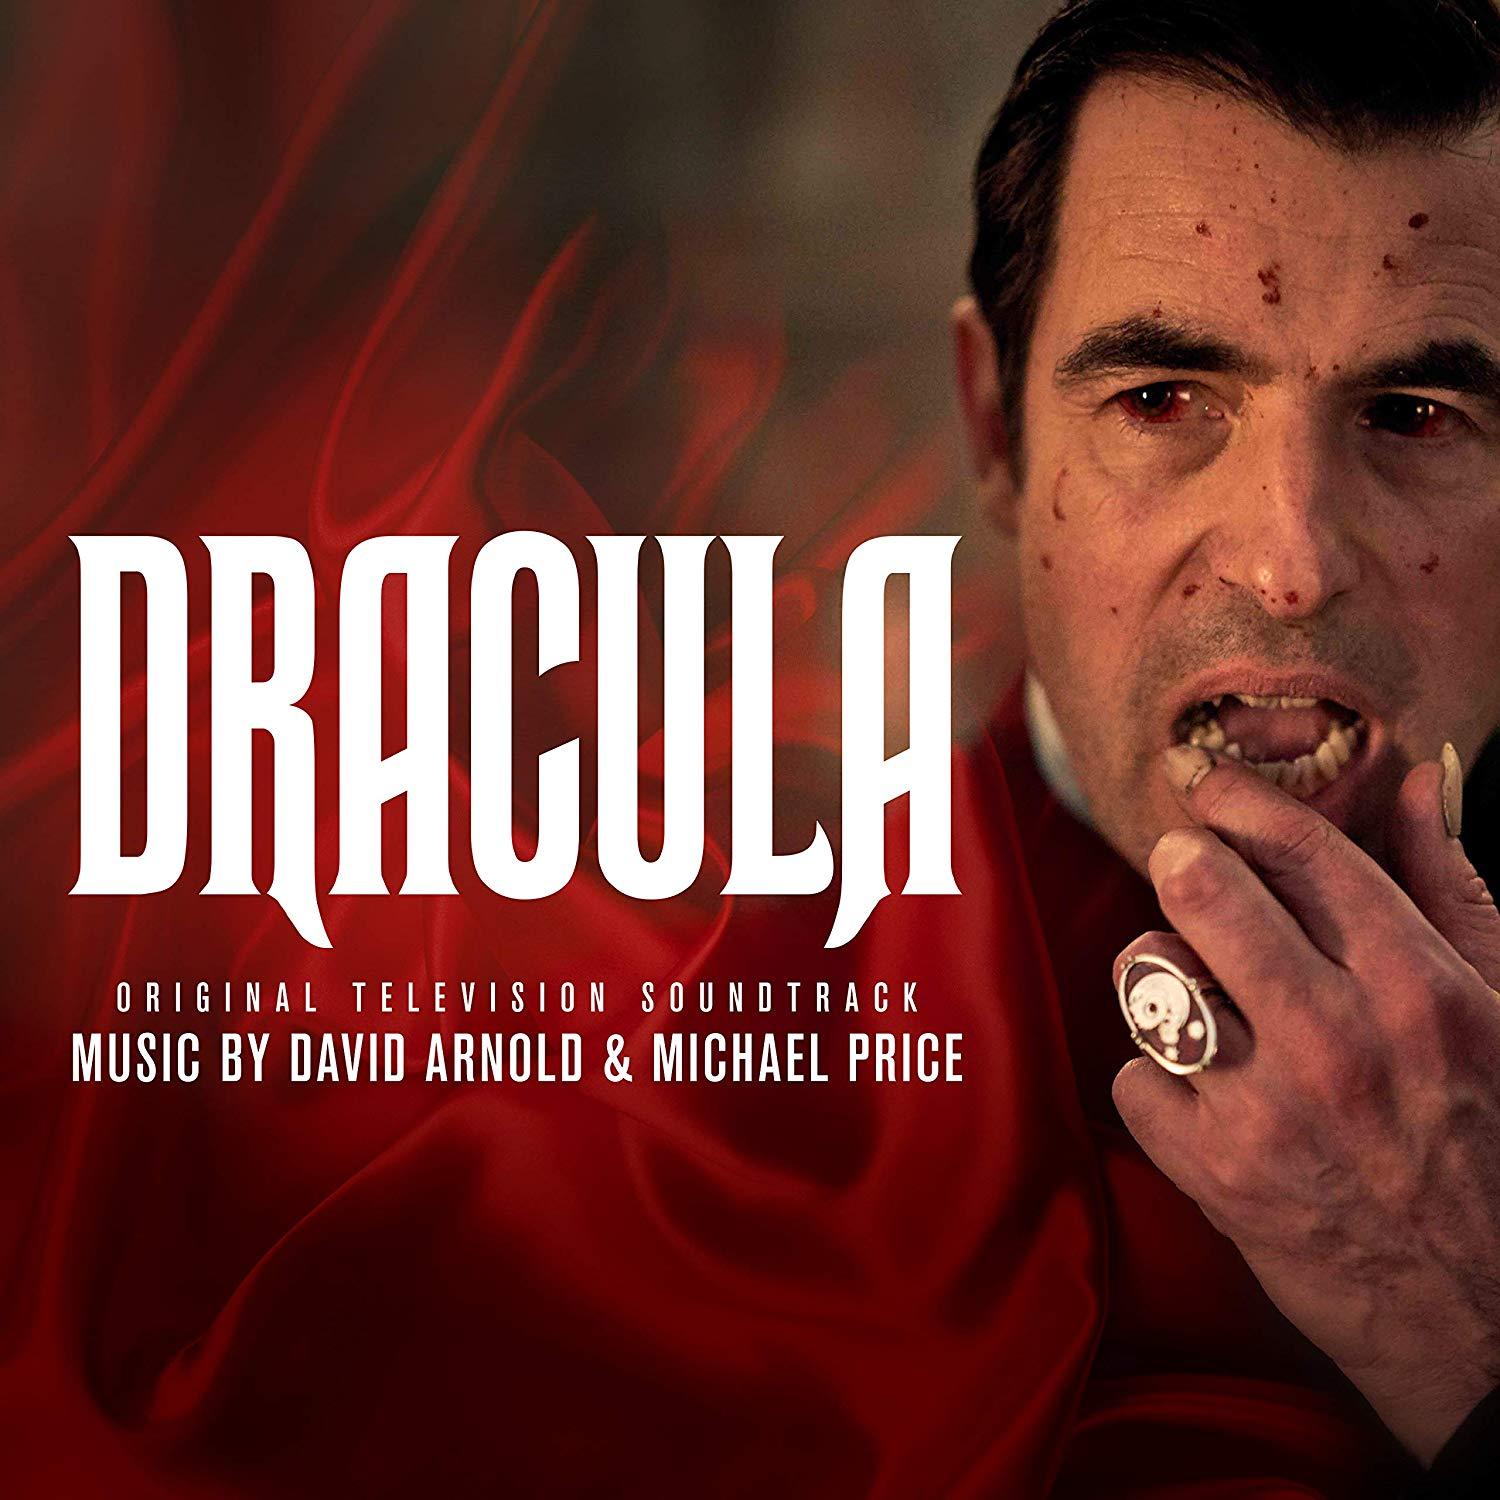 Dracula Netflix Wallpapers